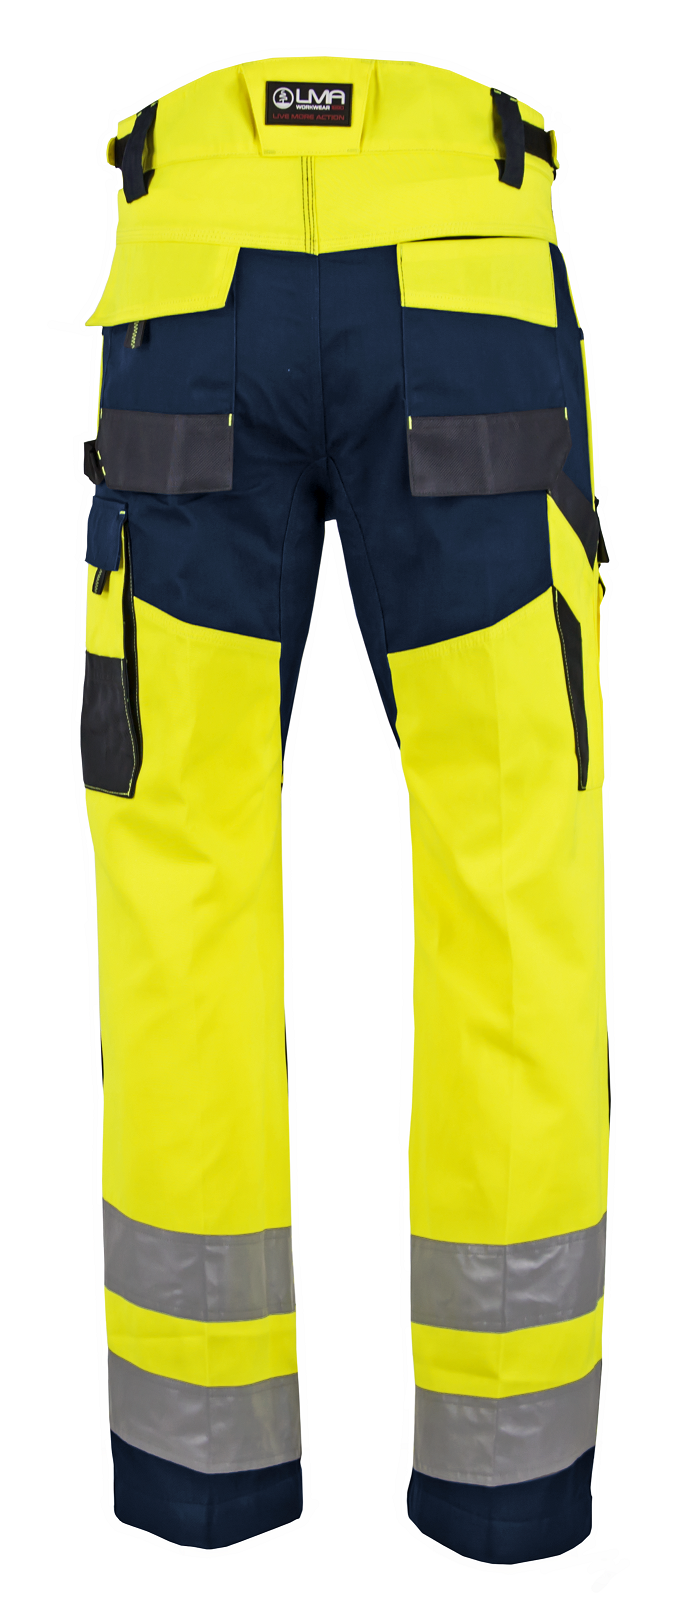 Pantalon haute visibilite Defense EN ISO 20471 jaune bleu cotepro vue 1